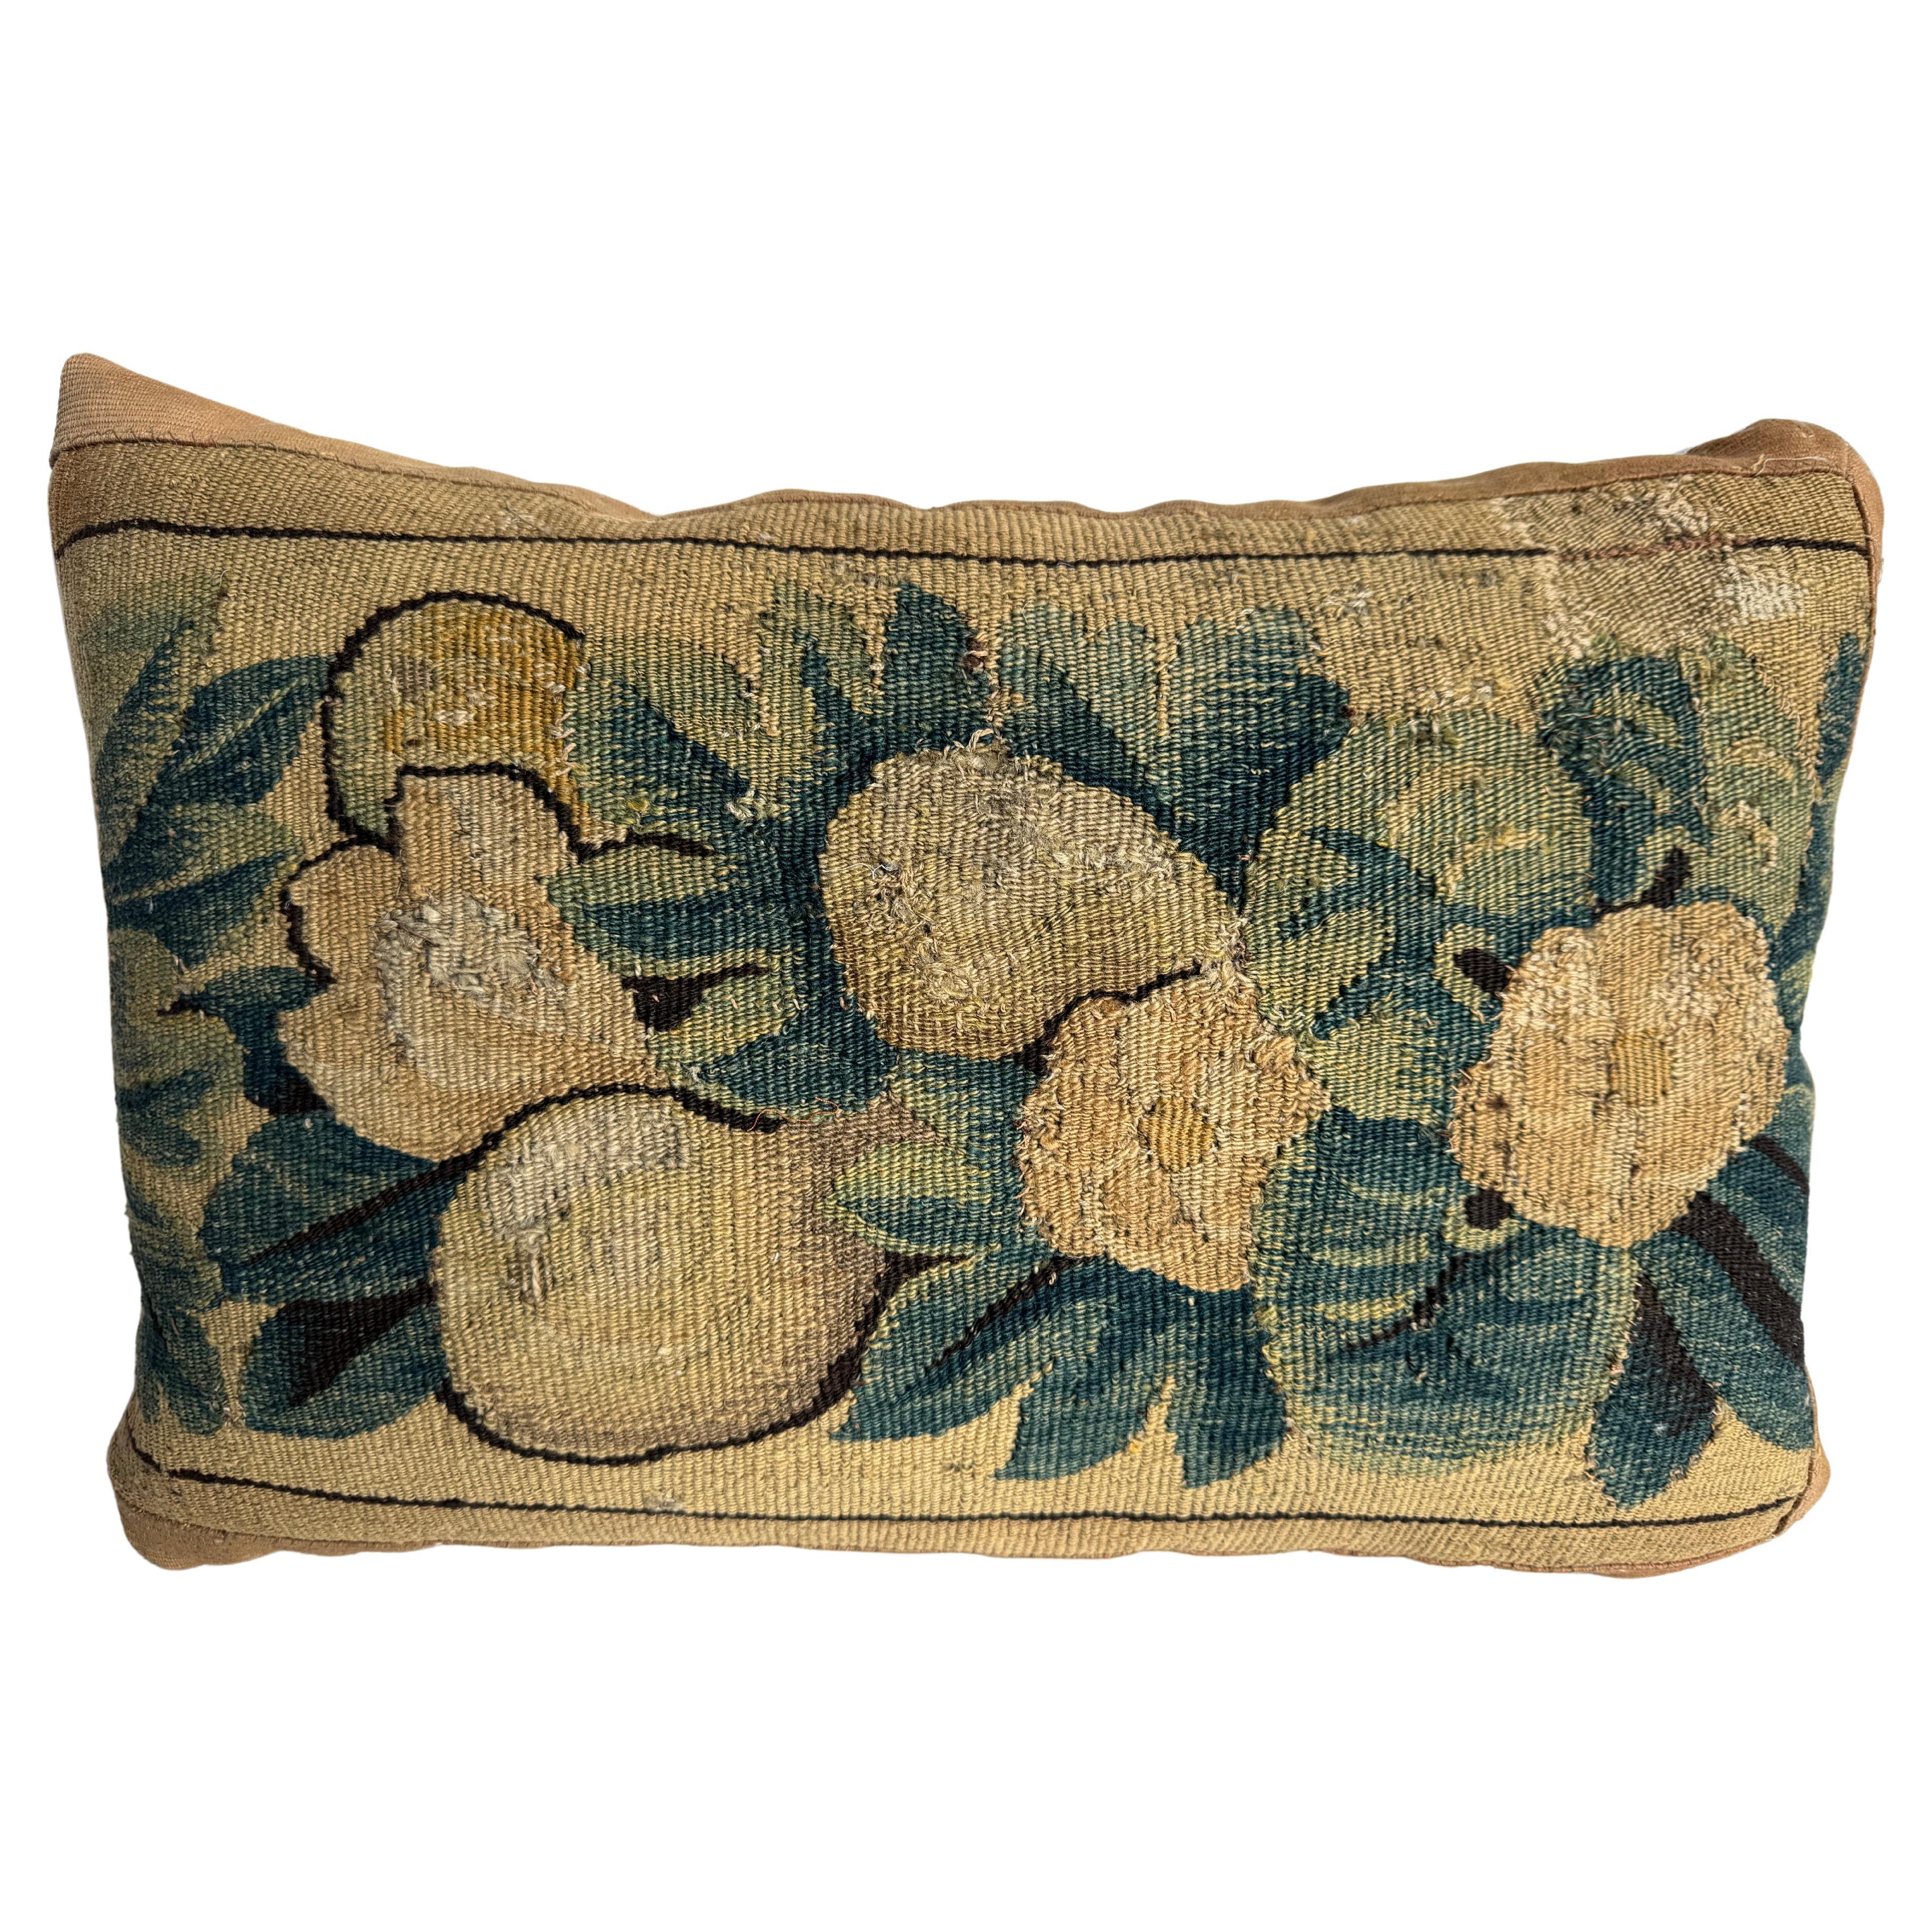 17th Century Flemish Pillow - 21" x 14"